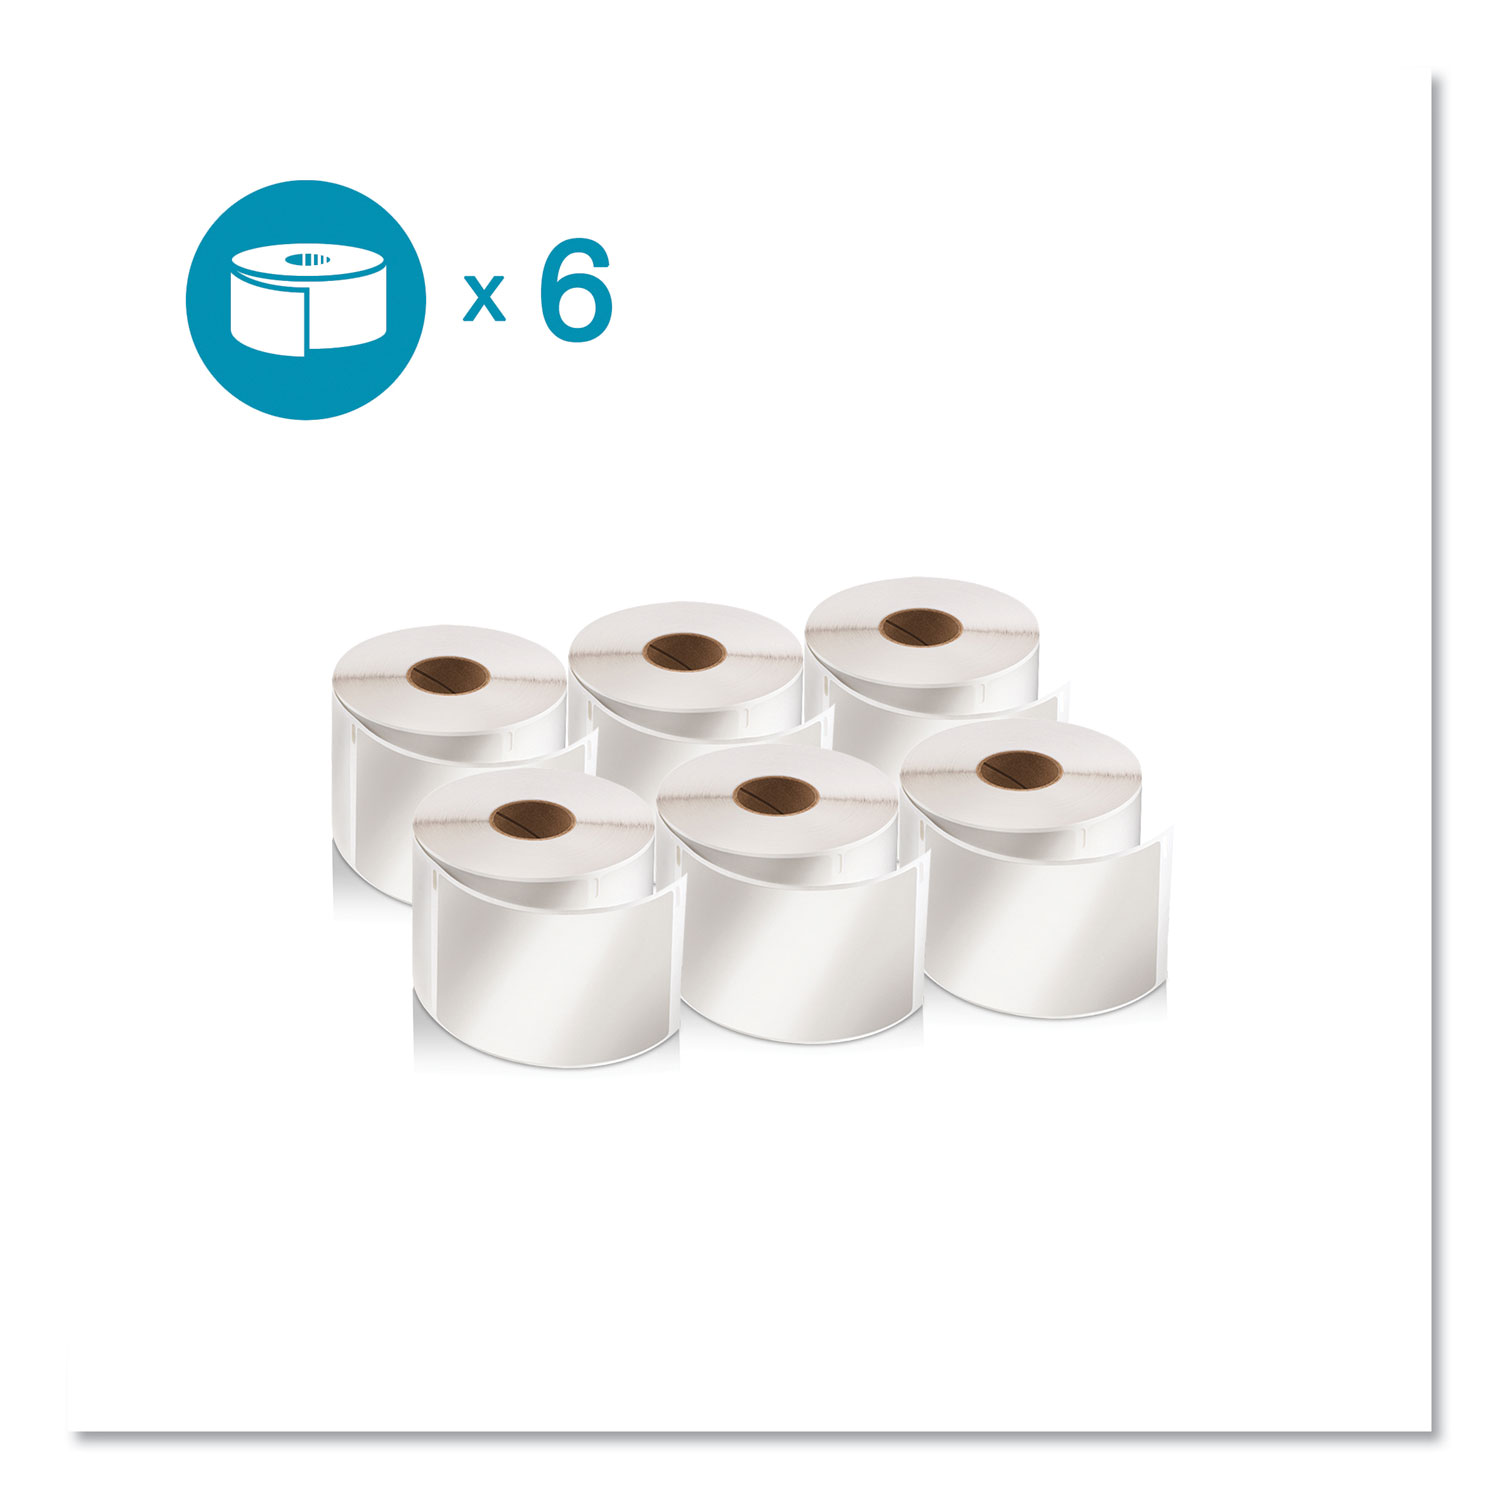  DYMO 2050811 LW Shipping Labels, 2.13 x 4, White, 220/Roll, 6 Rolls/Pack (DYM2050811) 